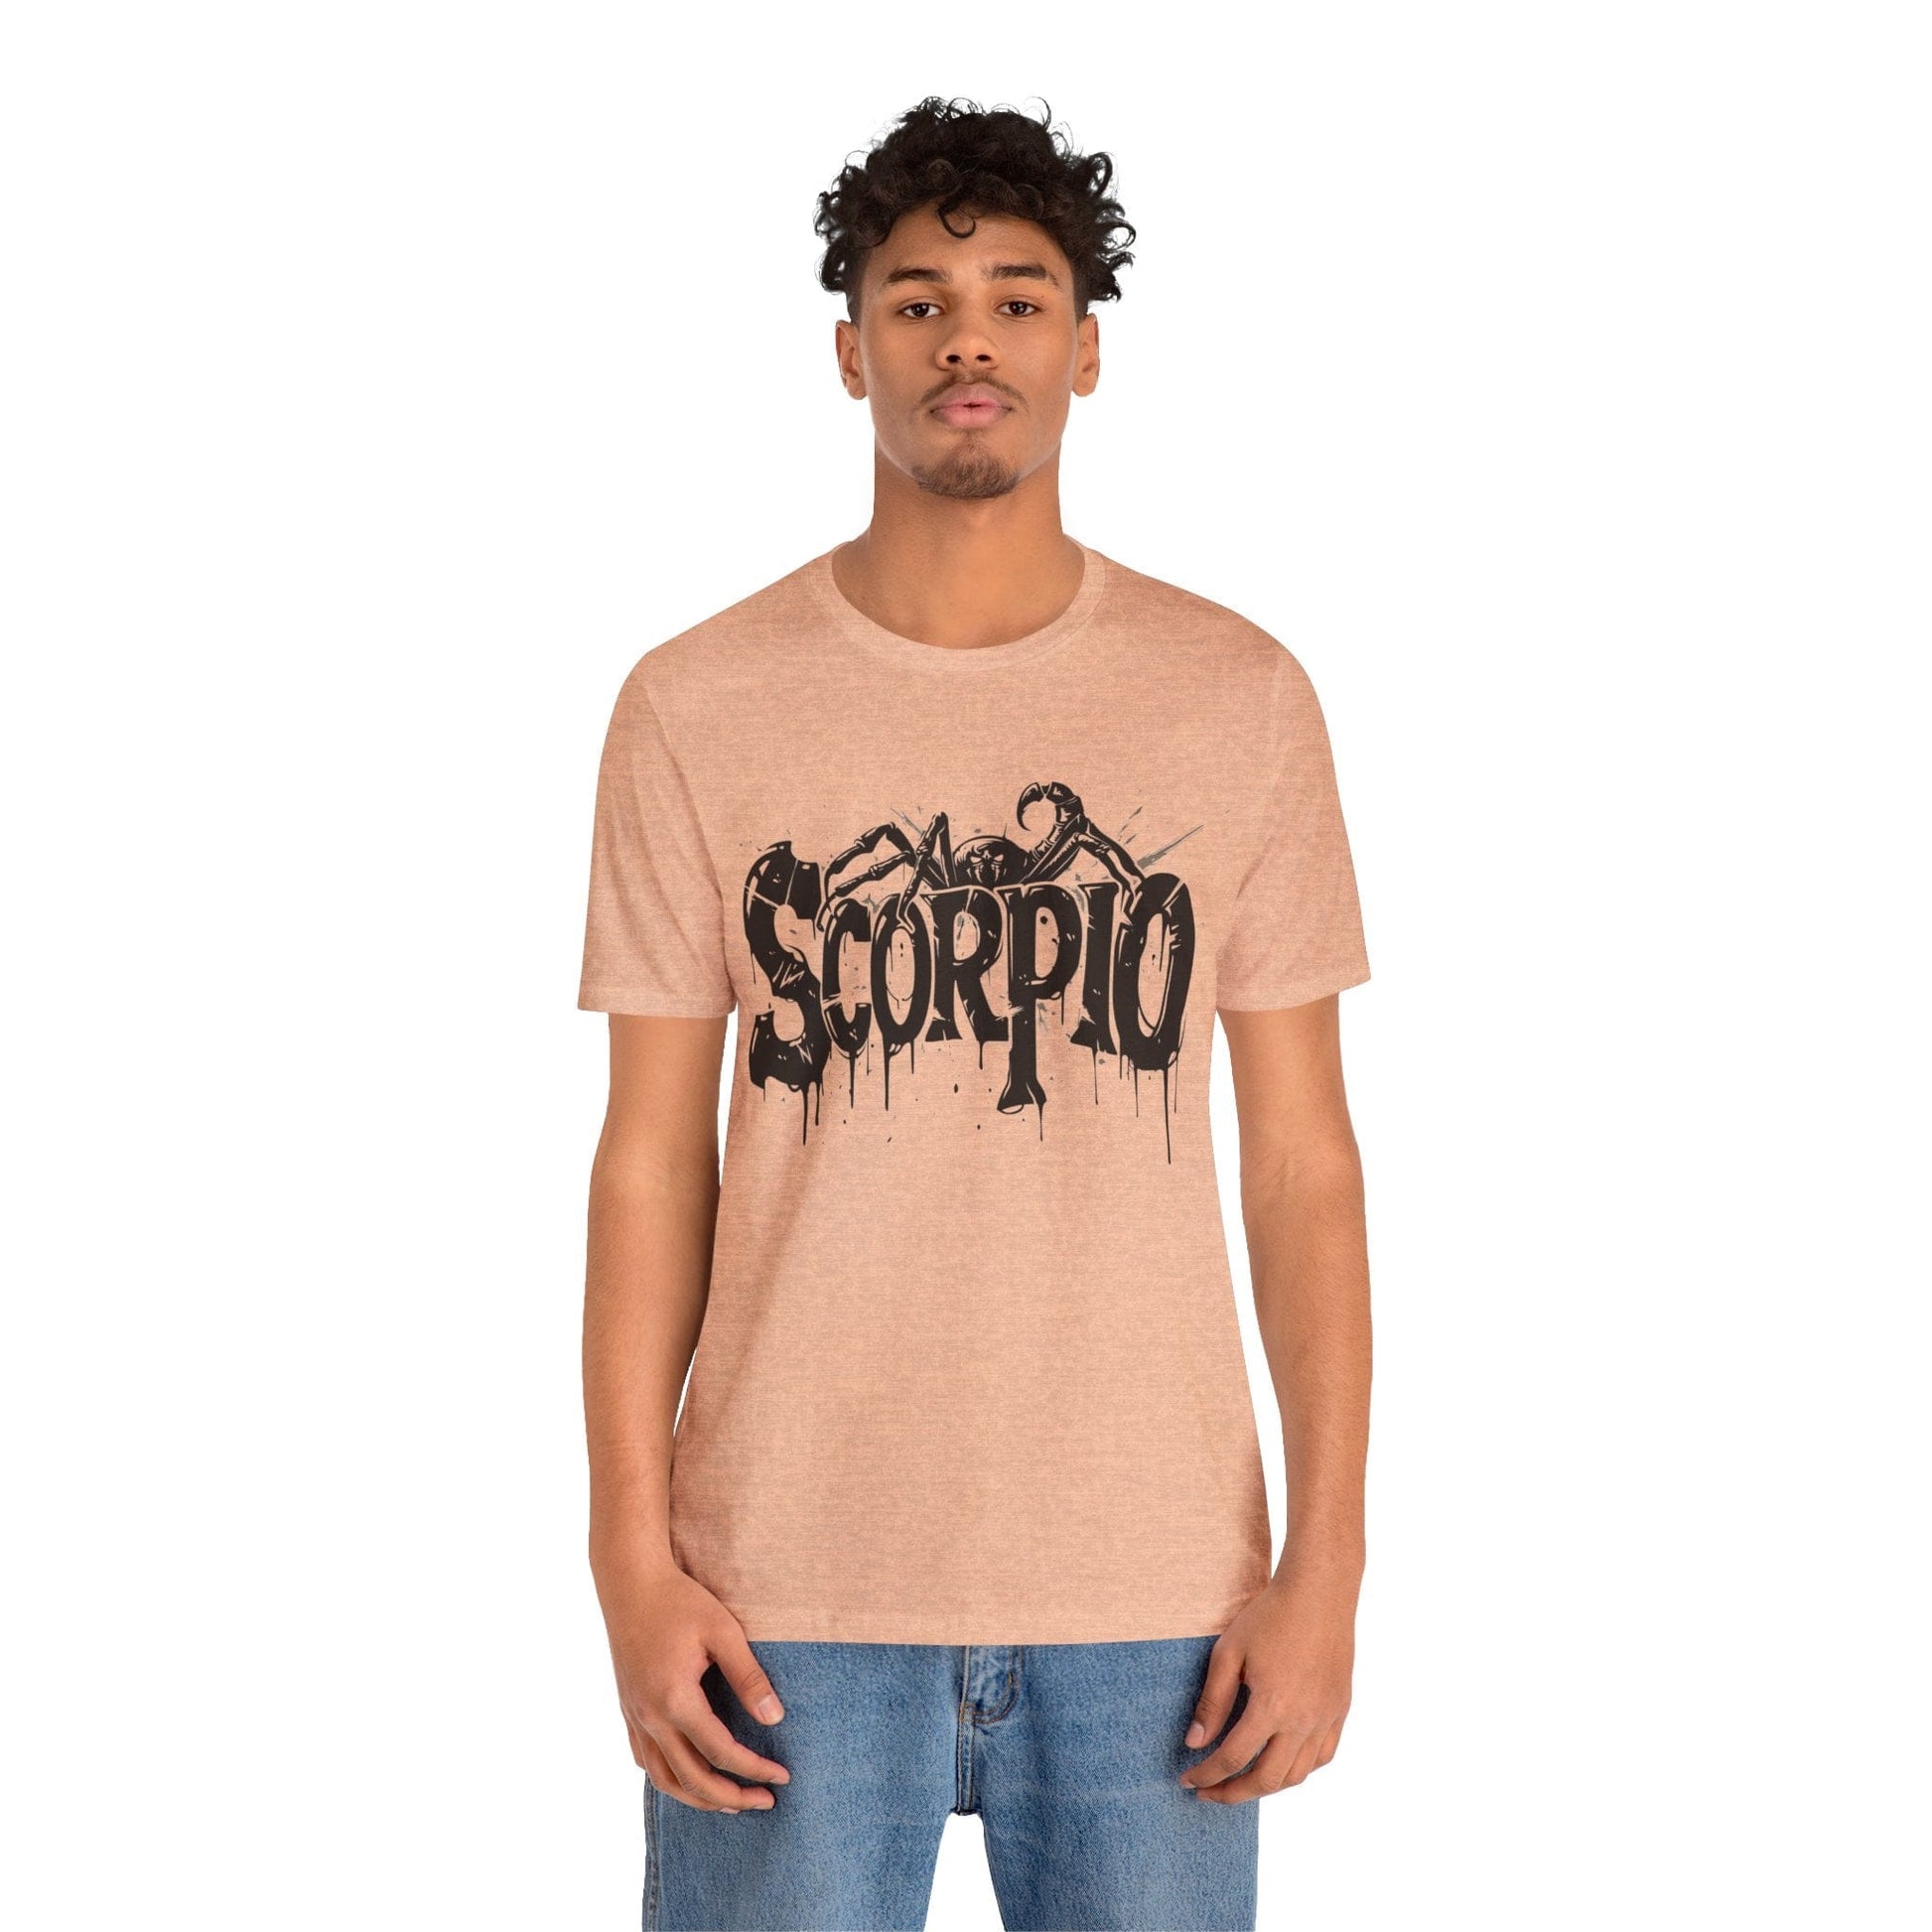 T-Shirt Sting of Mystery Scorpio TShirt: Intensity Unleashed